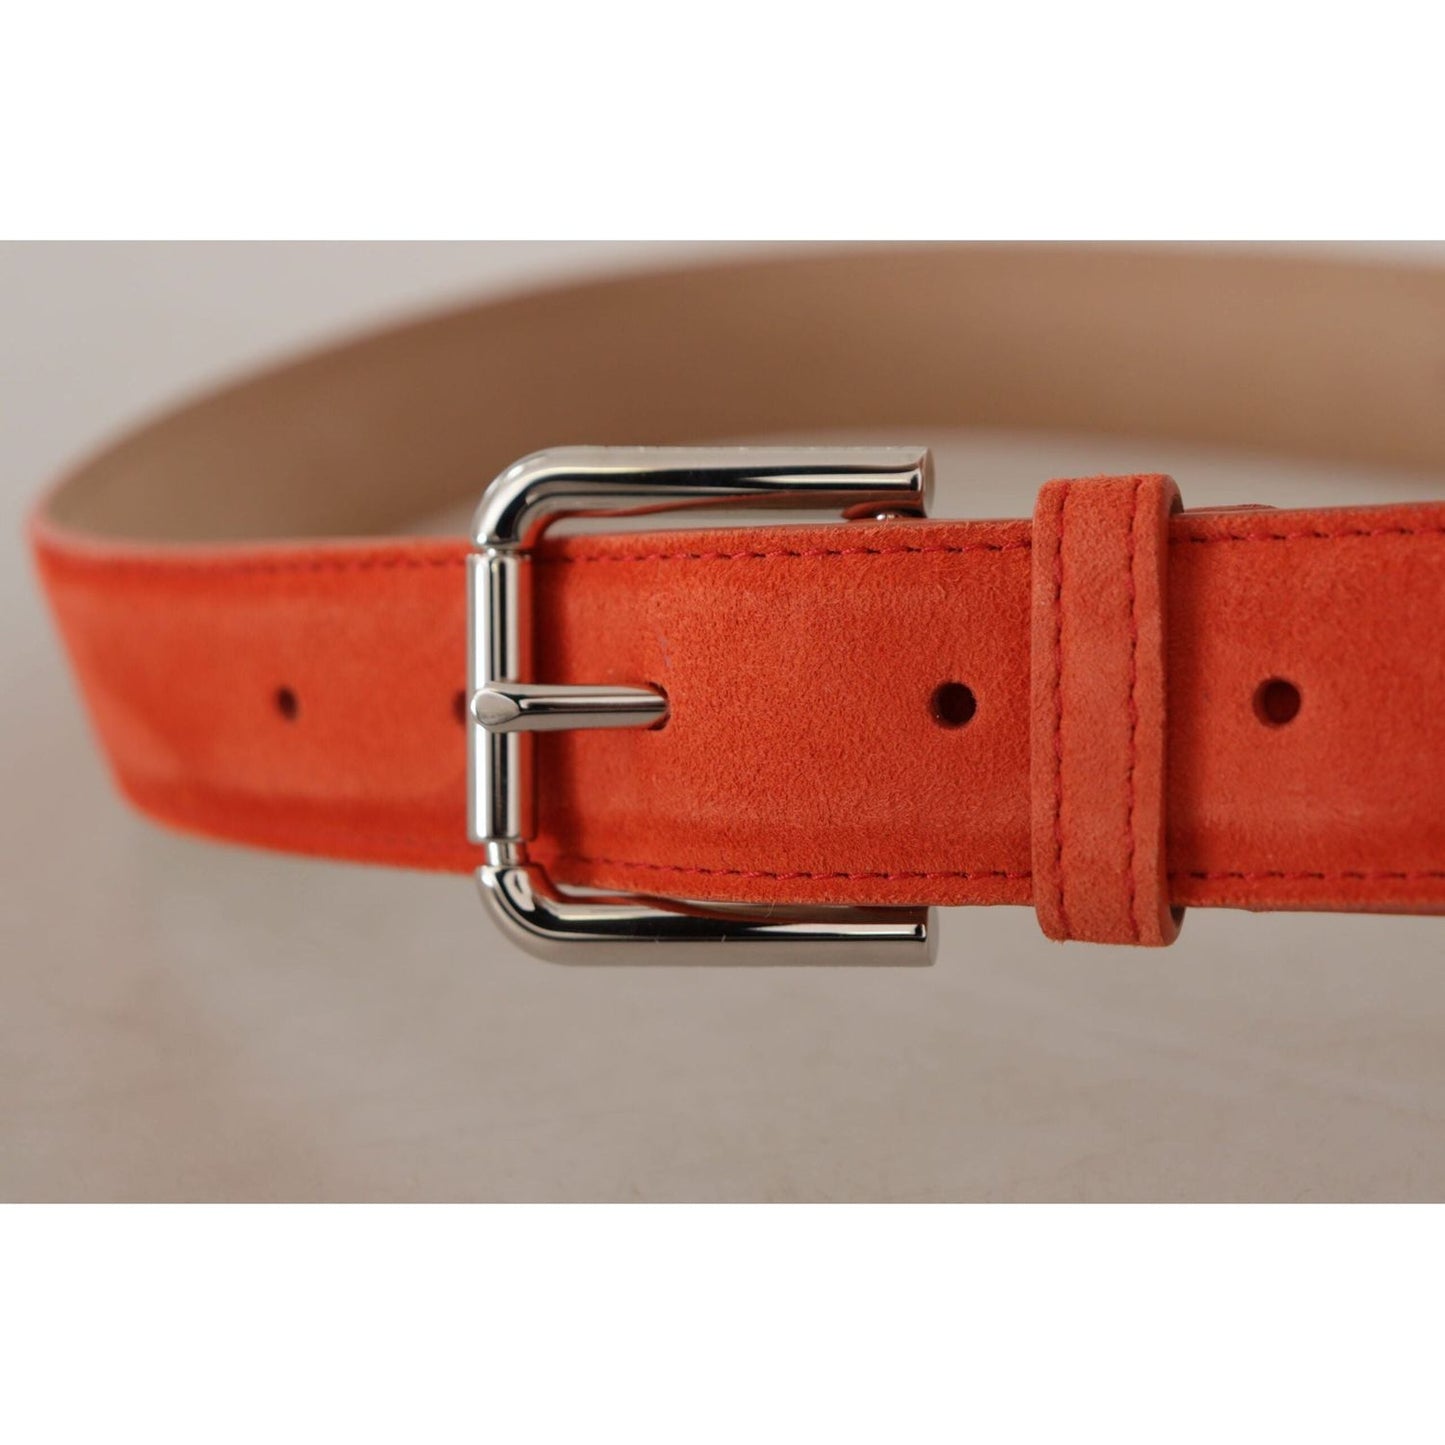 Dolce & Gabbana Elegant Suede Leather Belt in Vibrant Orange orange-leather-suede-silver-logo-metal-buckle-belt IMG_8851-scaled-06327ffc-f47.jpg